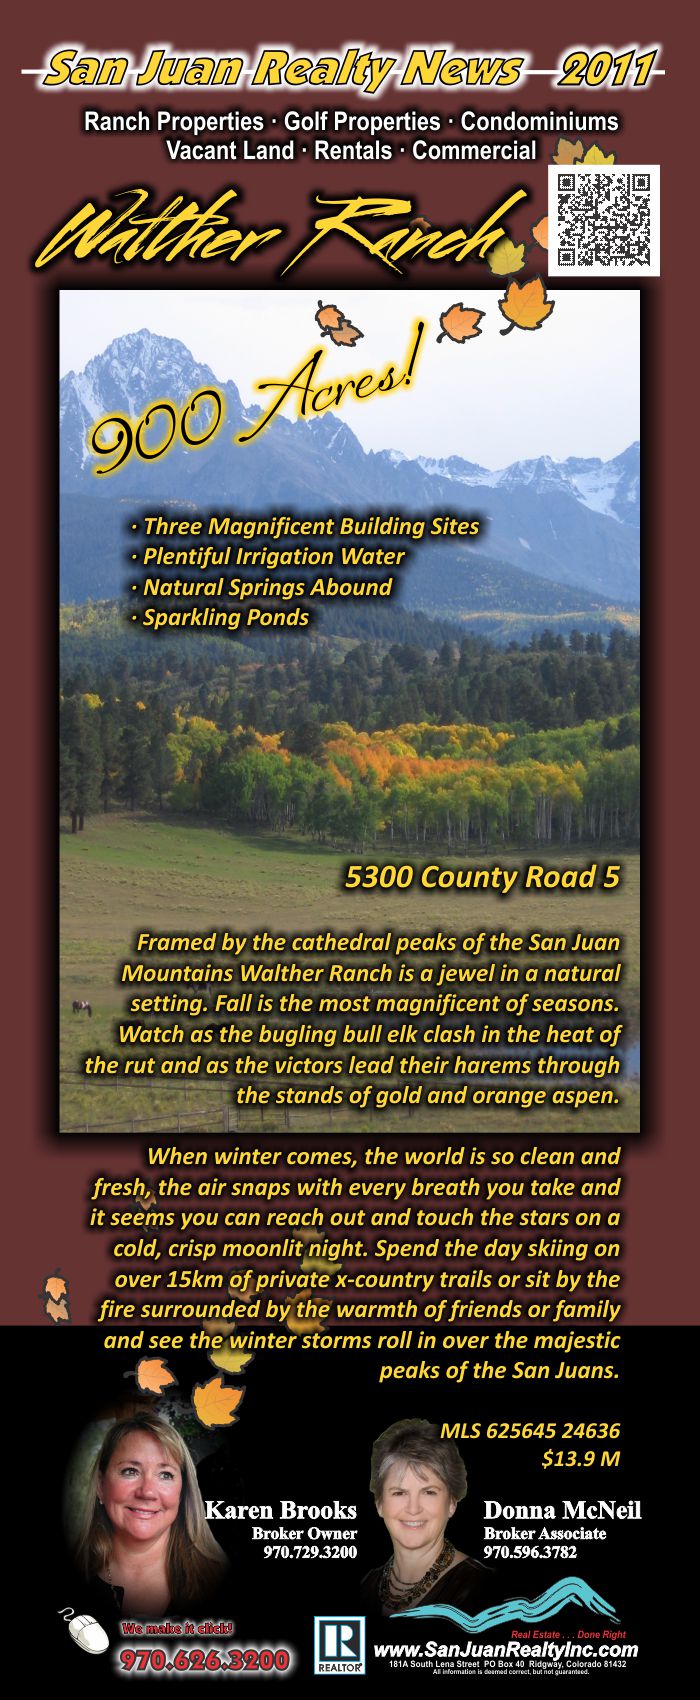 Walther-Ranch-5300-County-Road-5-Ridgway-Colorado